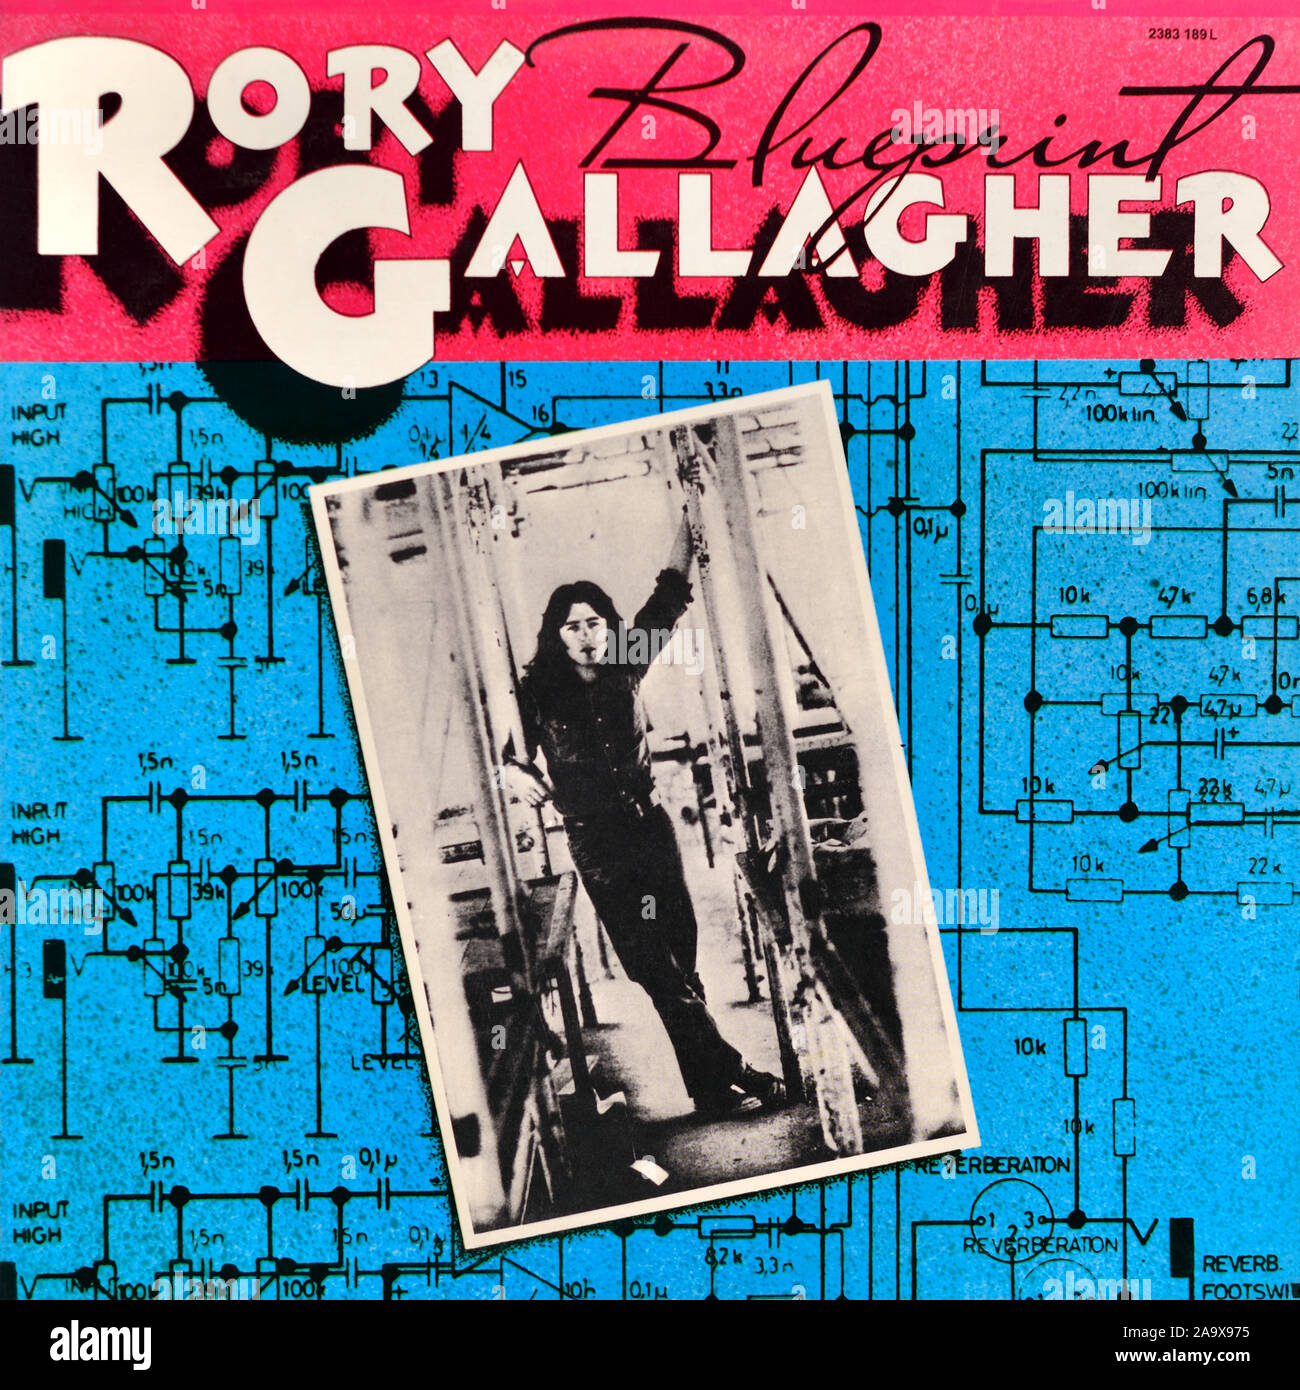 Rory Gallagher - original vinyl album cover - Blueprint - 1973 Stock Photo